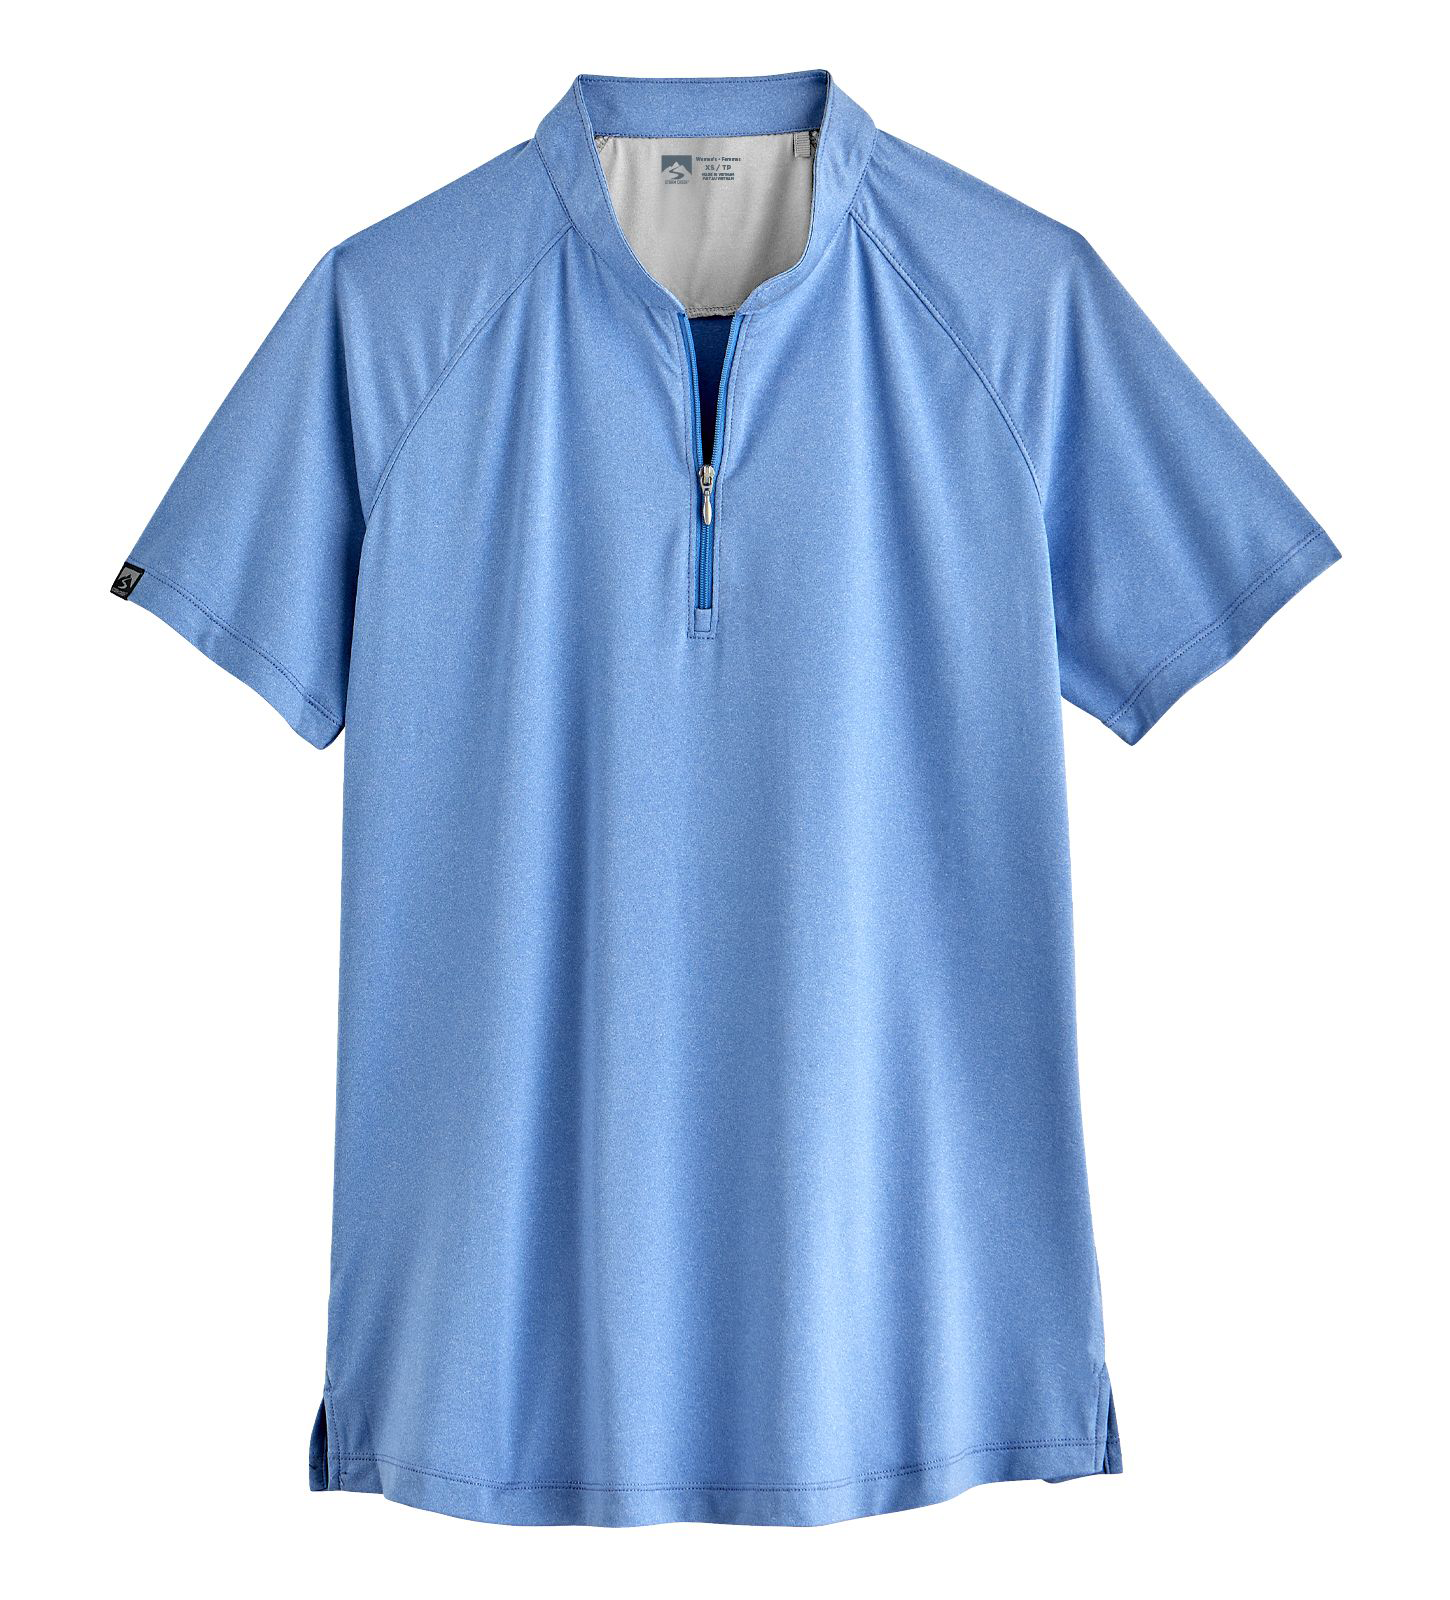 Storm Creek Visionary Polo Short-Sleeve Shirt for Ladies - Peri Blue - L